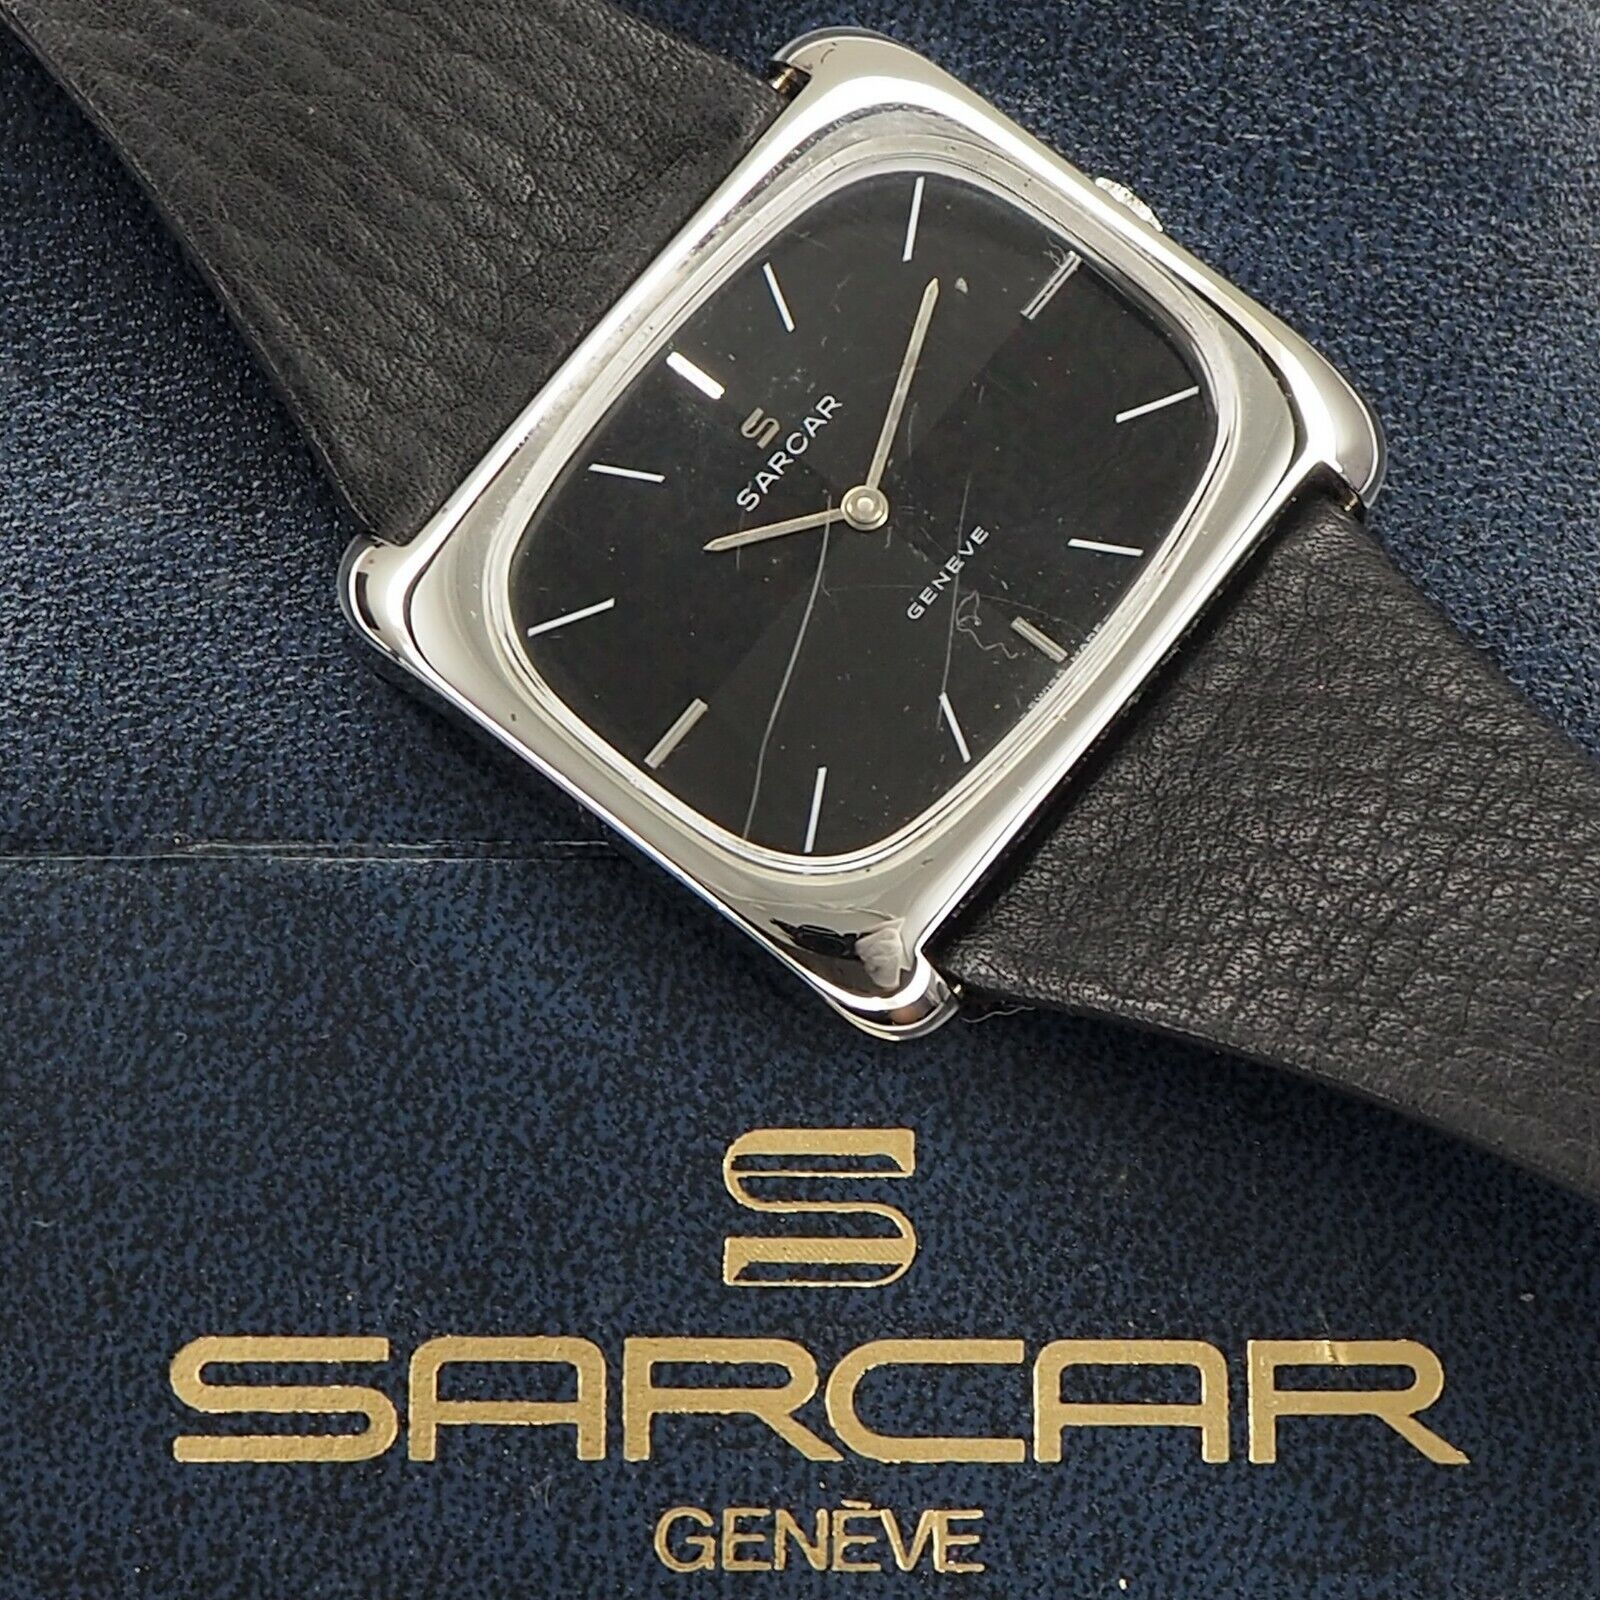 Sarcar Stainless Steel Wristwatch-kultuhr from the 1970er Years-NOS UNWORN!